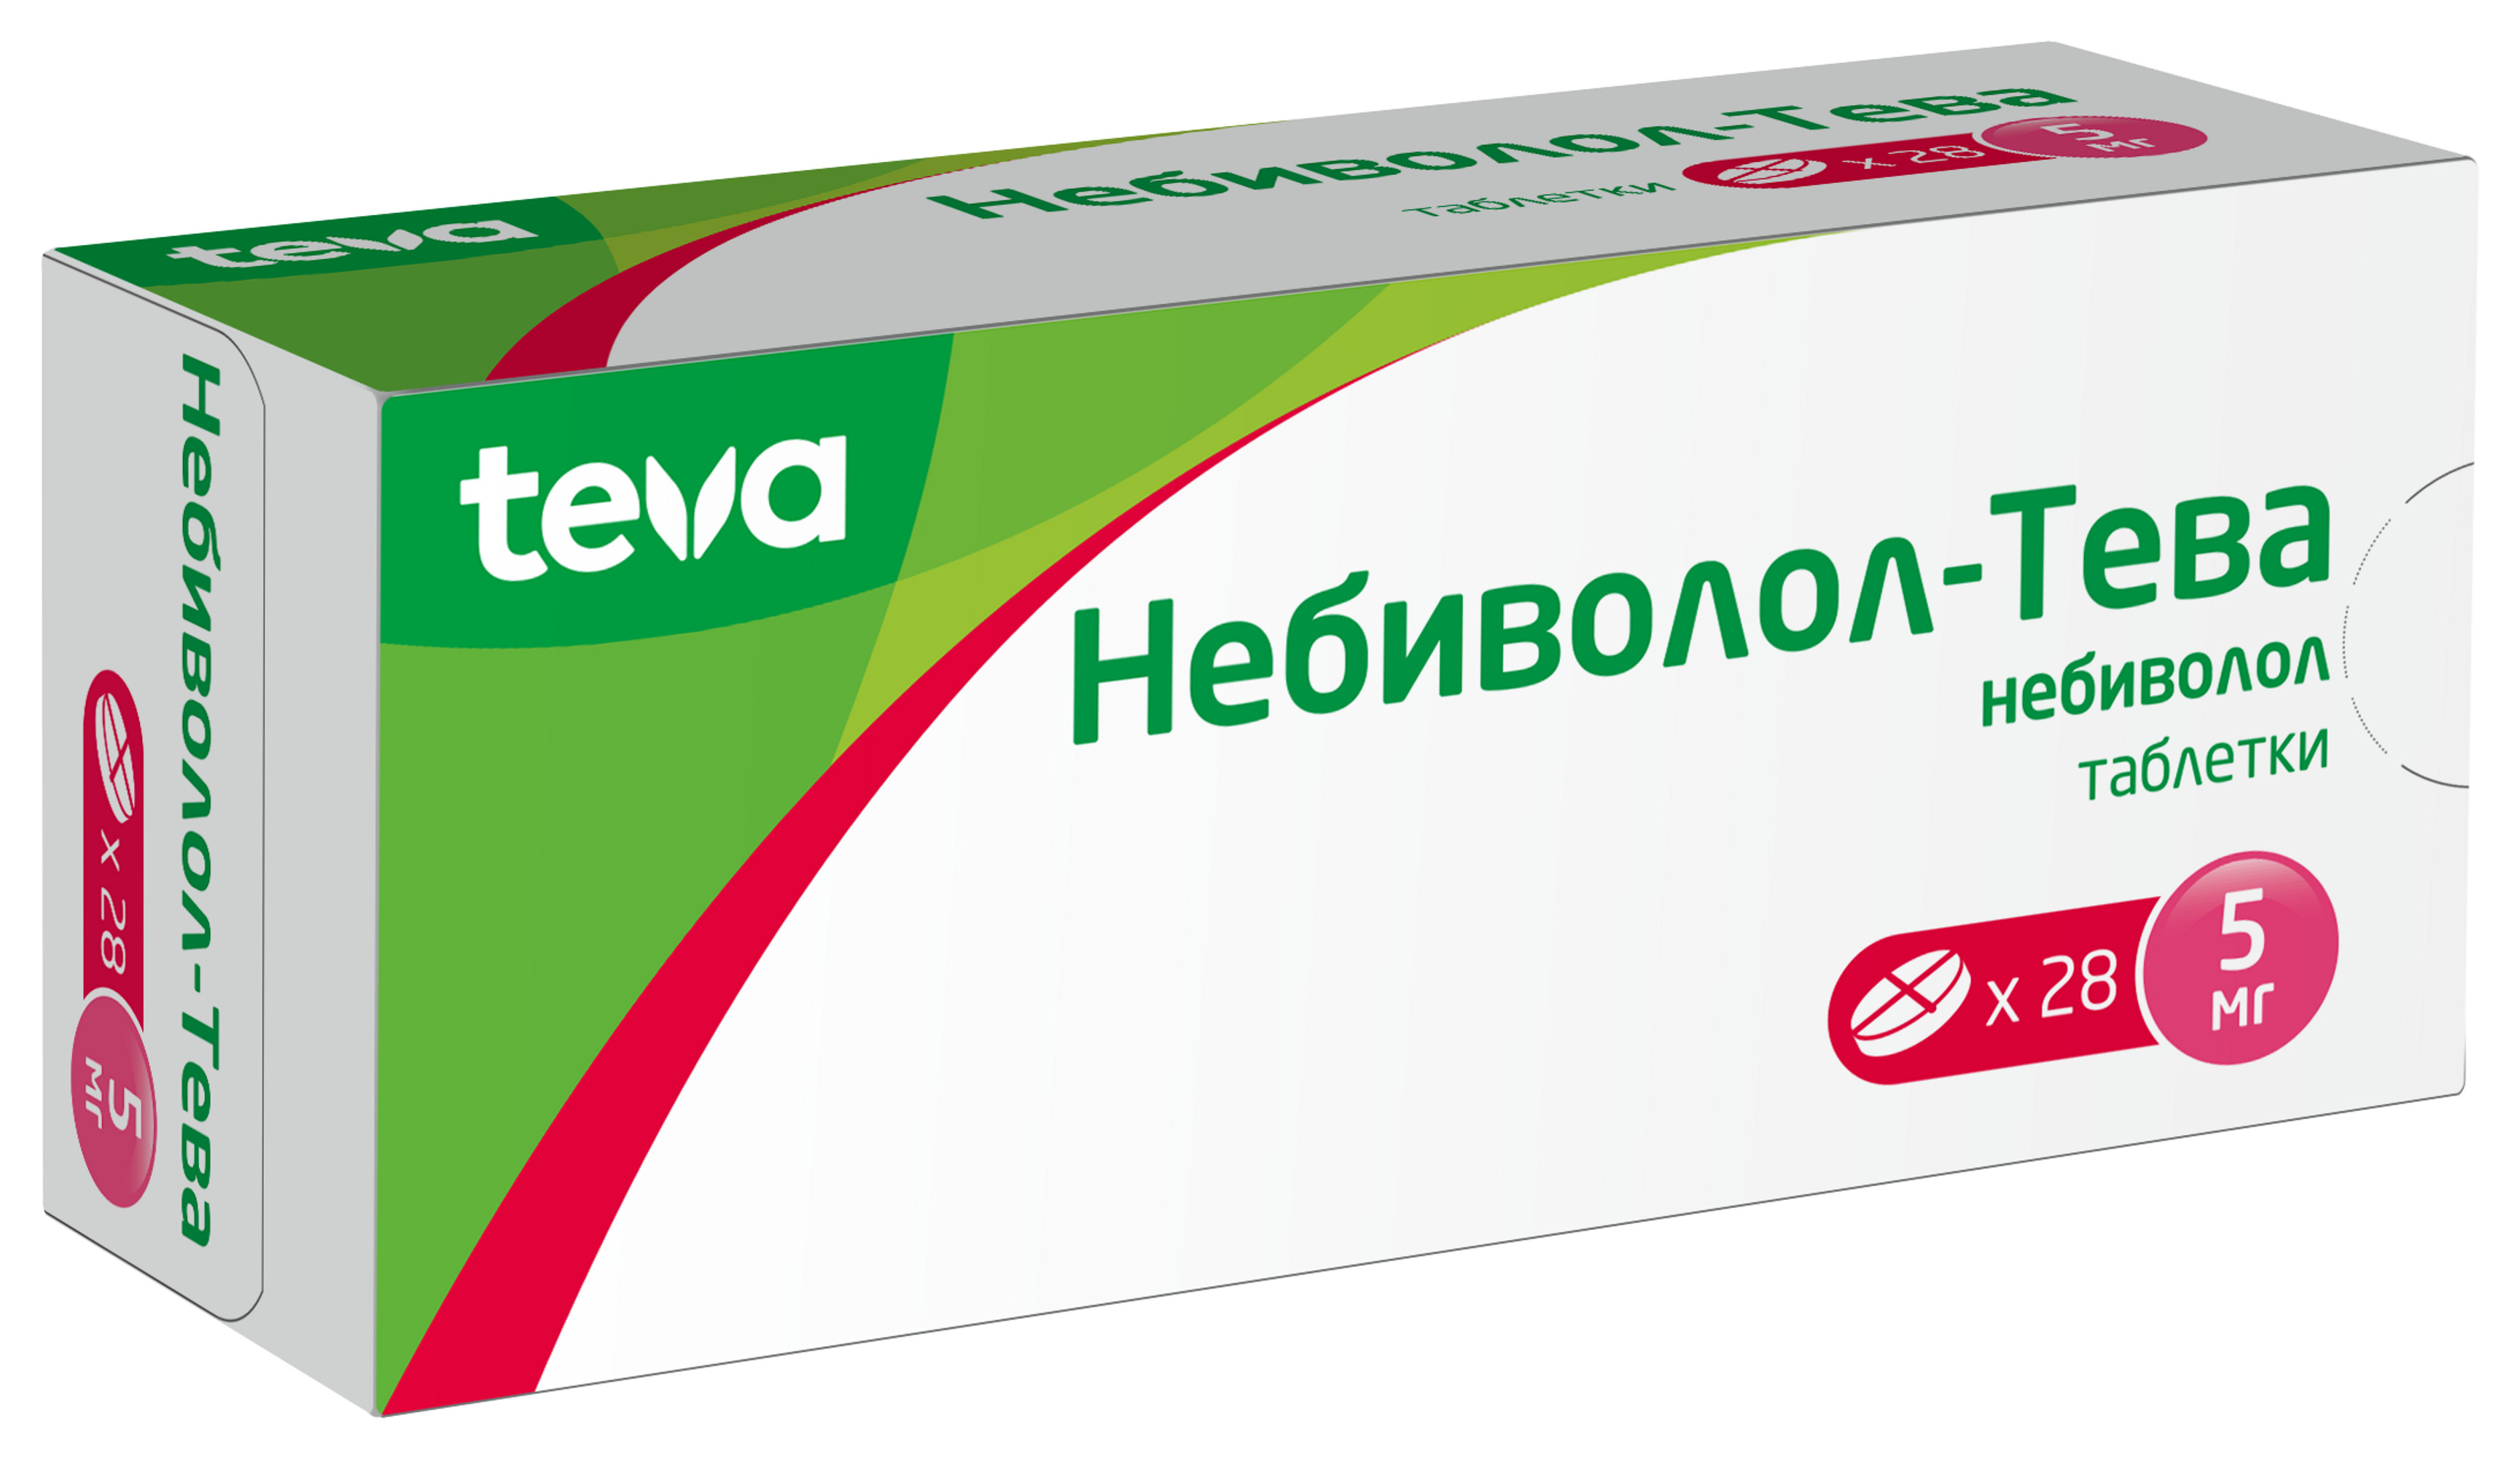 Небиволол-Тева Таблетки 5 мг 28 шт  по цене 604,0 руб в интернет .